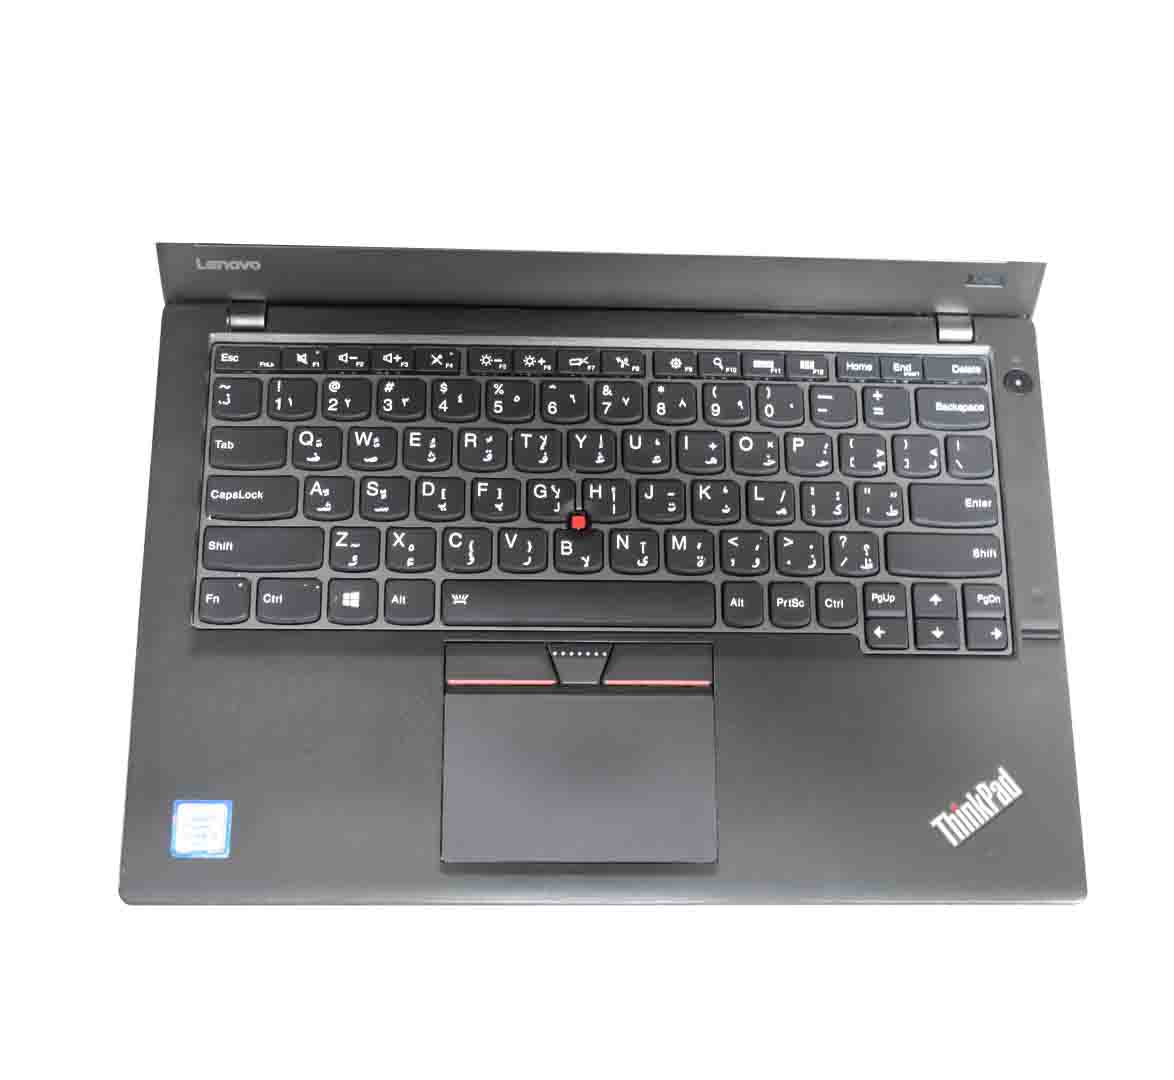 Lenovo ThinkPad X260 Business Laptop, Intel Core i7-6th Generation CPU, 8GB RAM, 256GB SSD, 12 inch Display, Windows 10 Pro